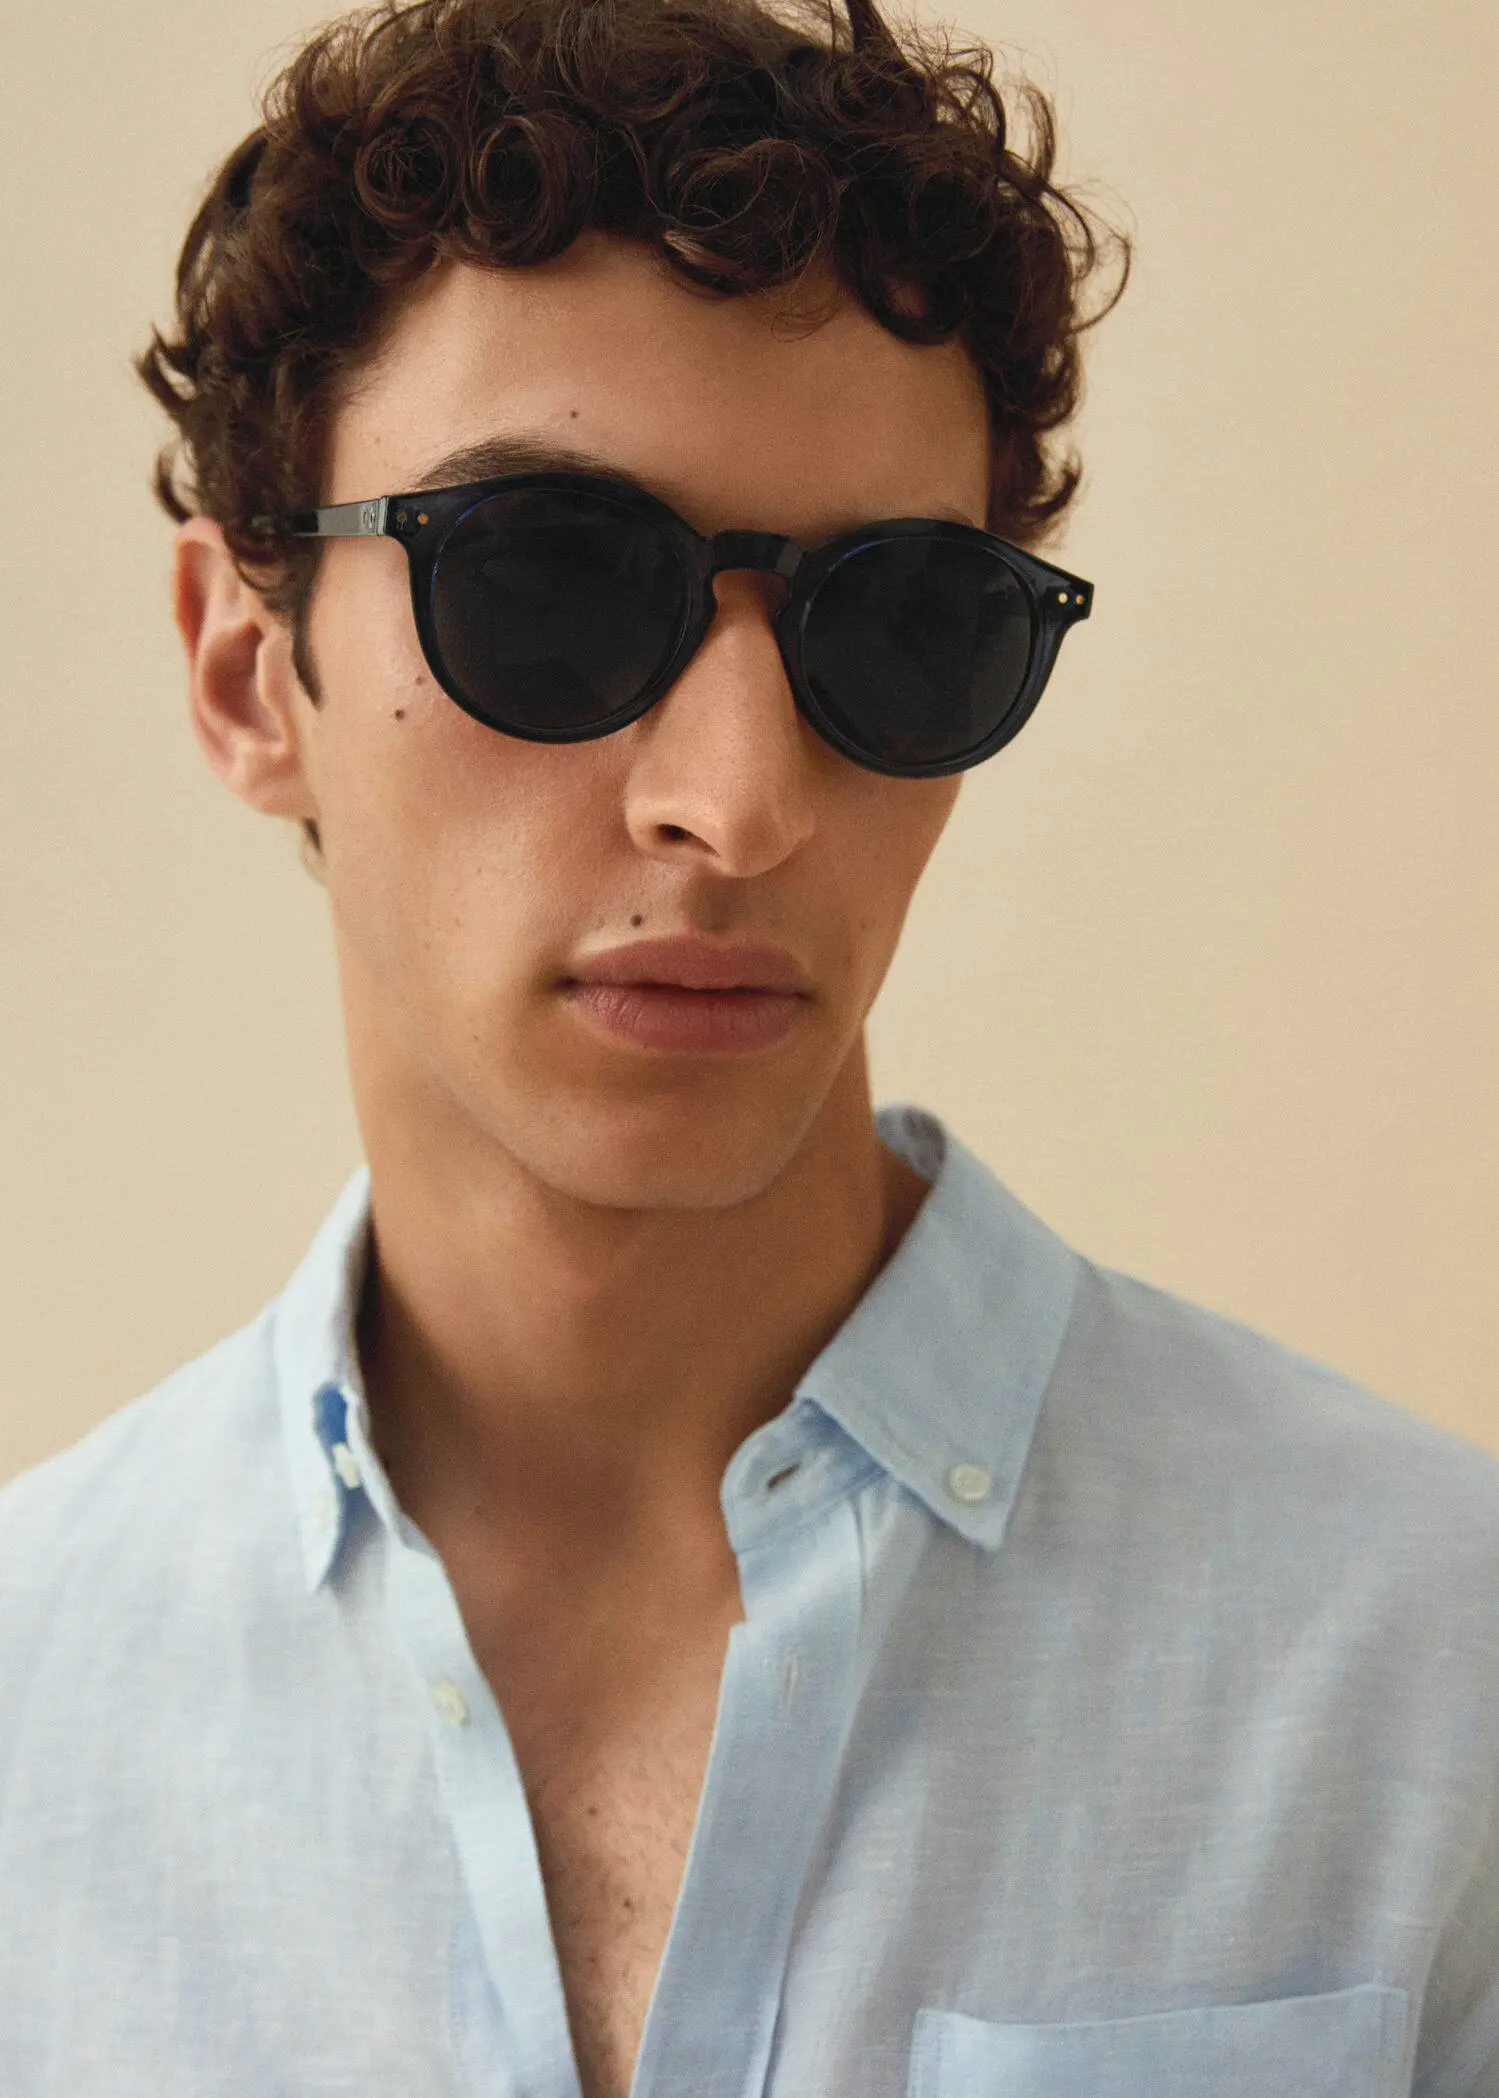 Mango Polarised sunglasses. a young man wearing sunglasses and a blue shirt. 